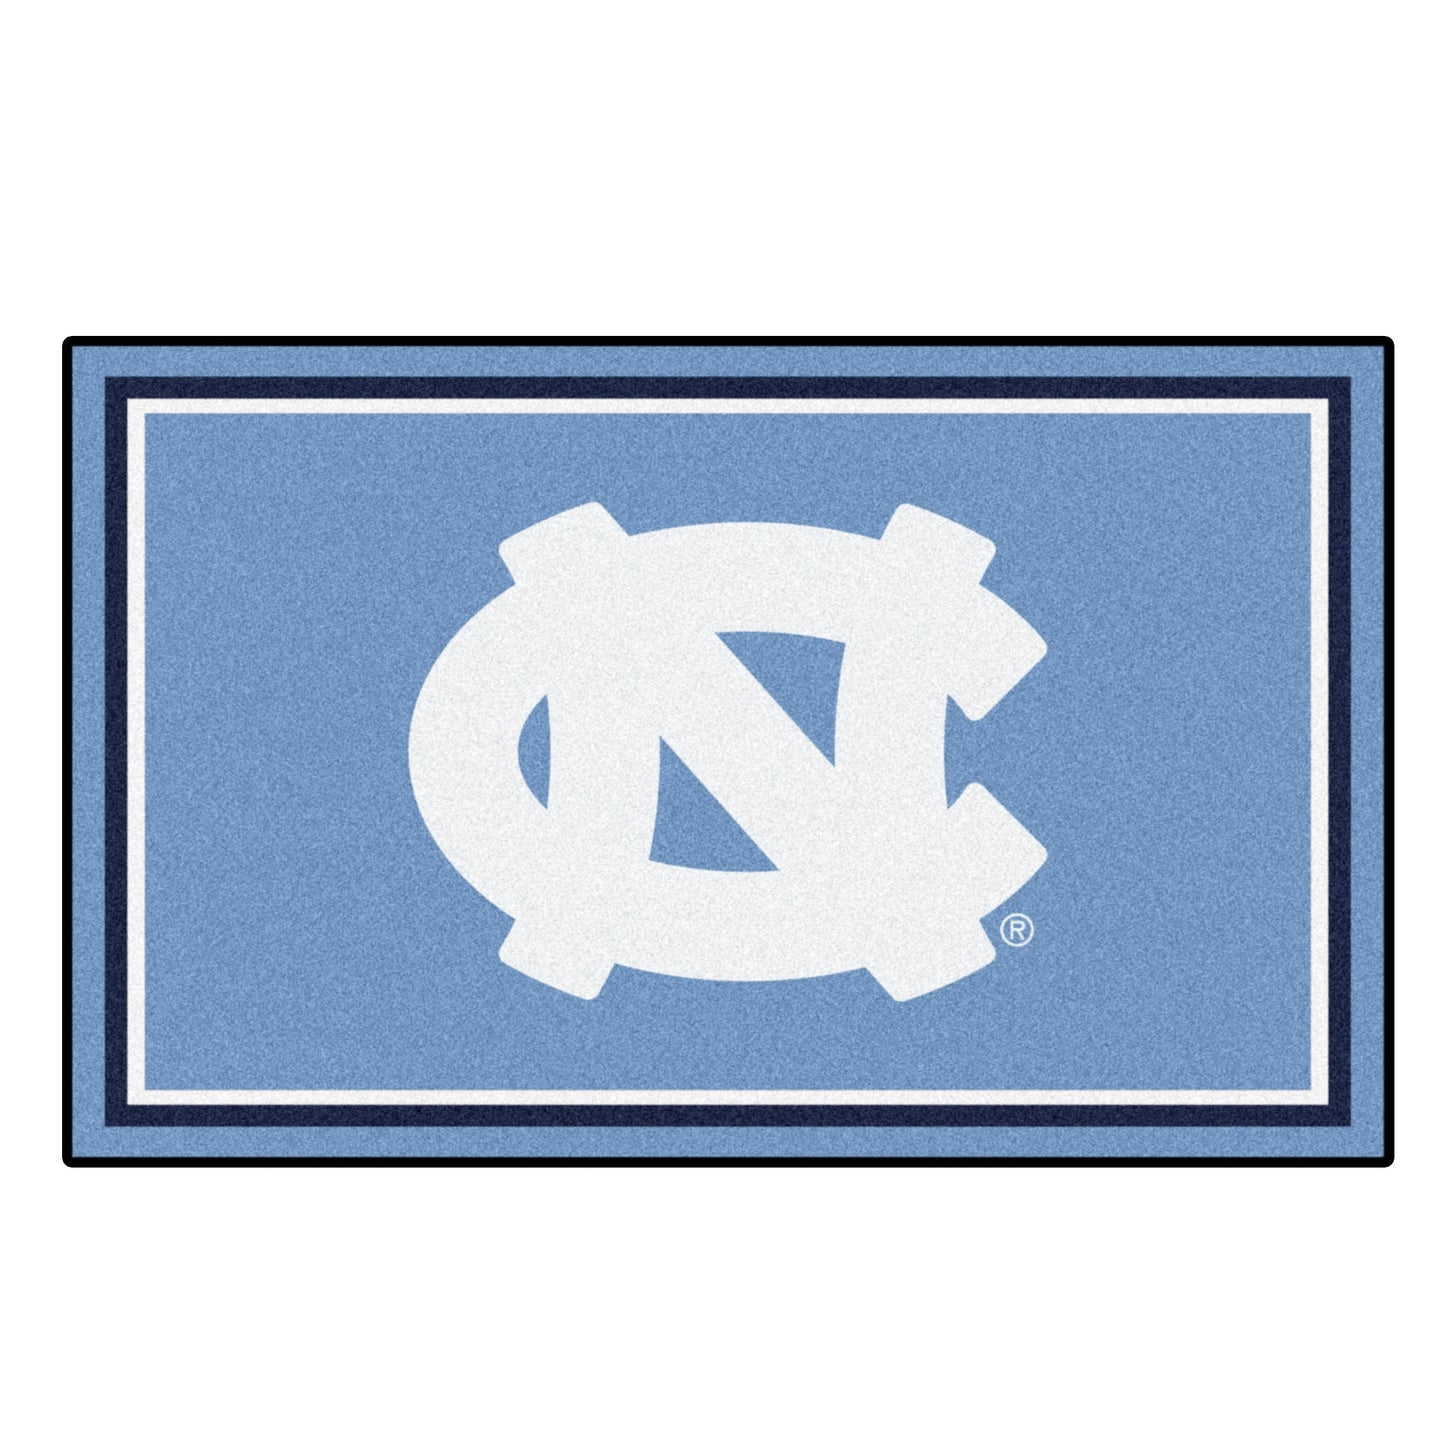 North Carolina Tar Heels 4x6 Rug with NC Logo by Fanmats